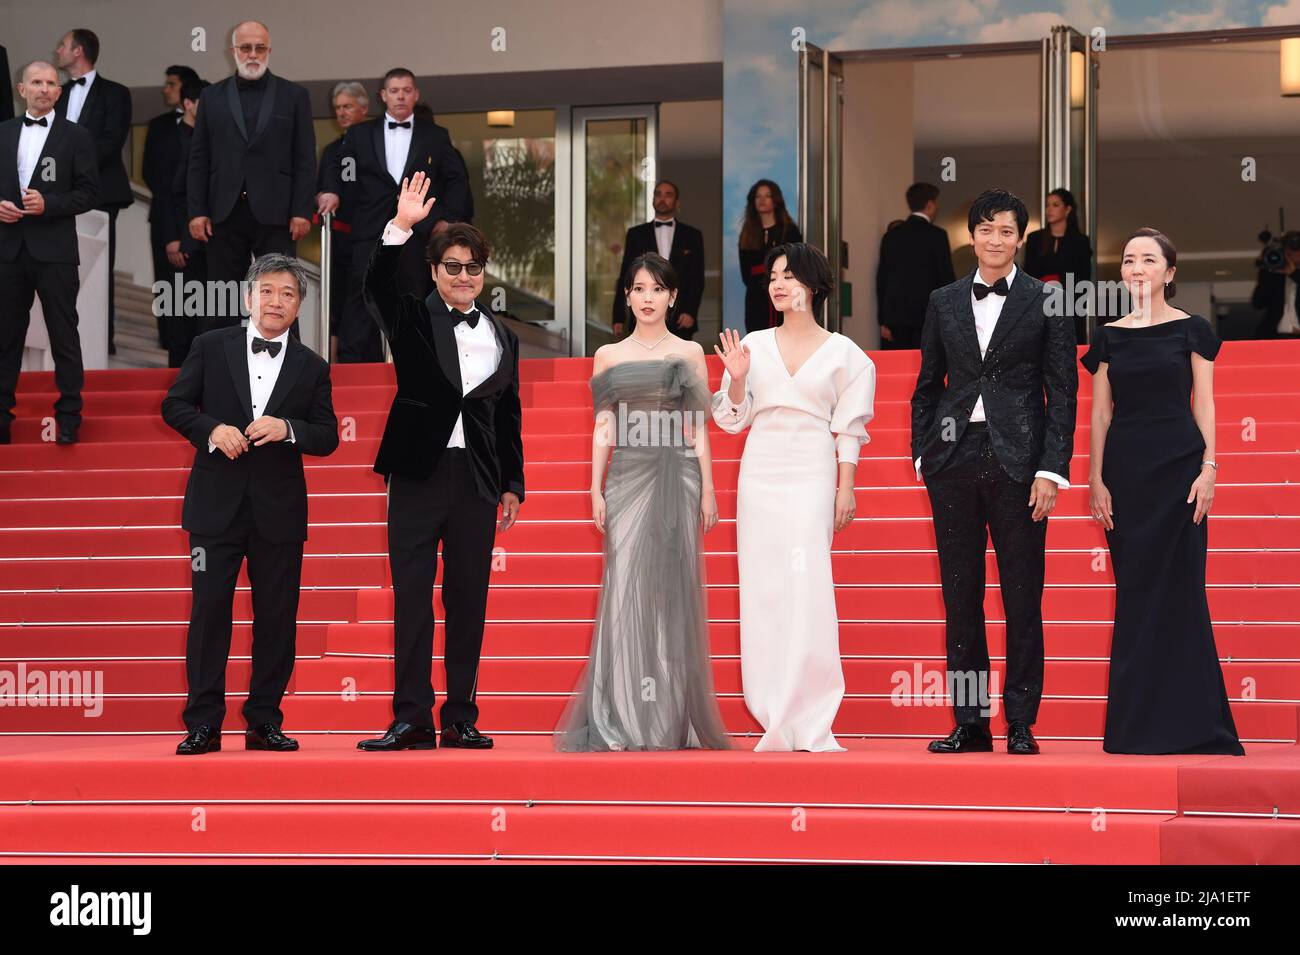 (Da sinistra a destra) Hirokazu Koreeda, Song Kang-ho, Choi Hee-jin, Lee Joo-Young, Gang Dong-Won e Bae Doona, partecipando alla fotocellula Broker durante il Festival del Cinema di Cannes del 75th a Cannes, Francia. Data immagine: Giovedì 26 maggio 2022. Foto Stock